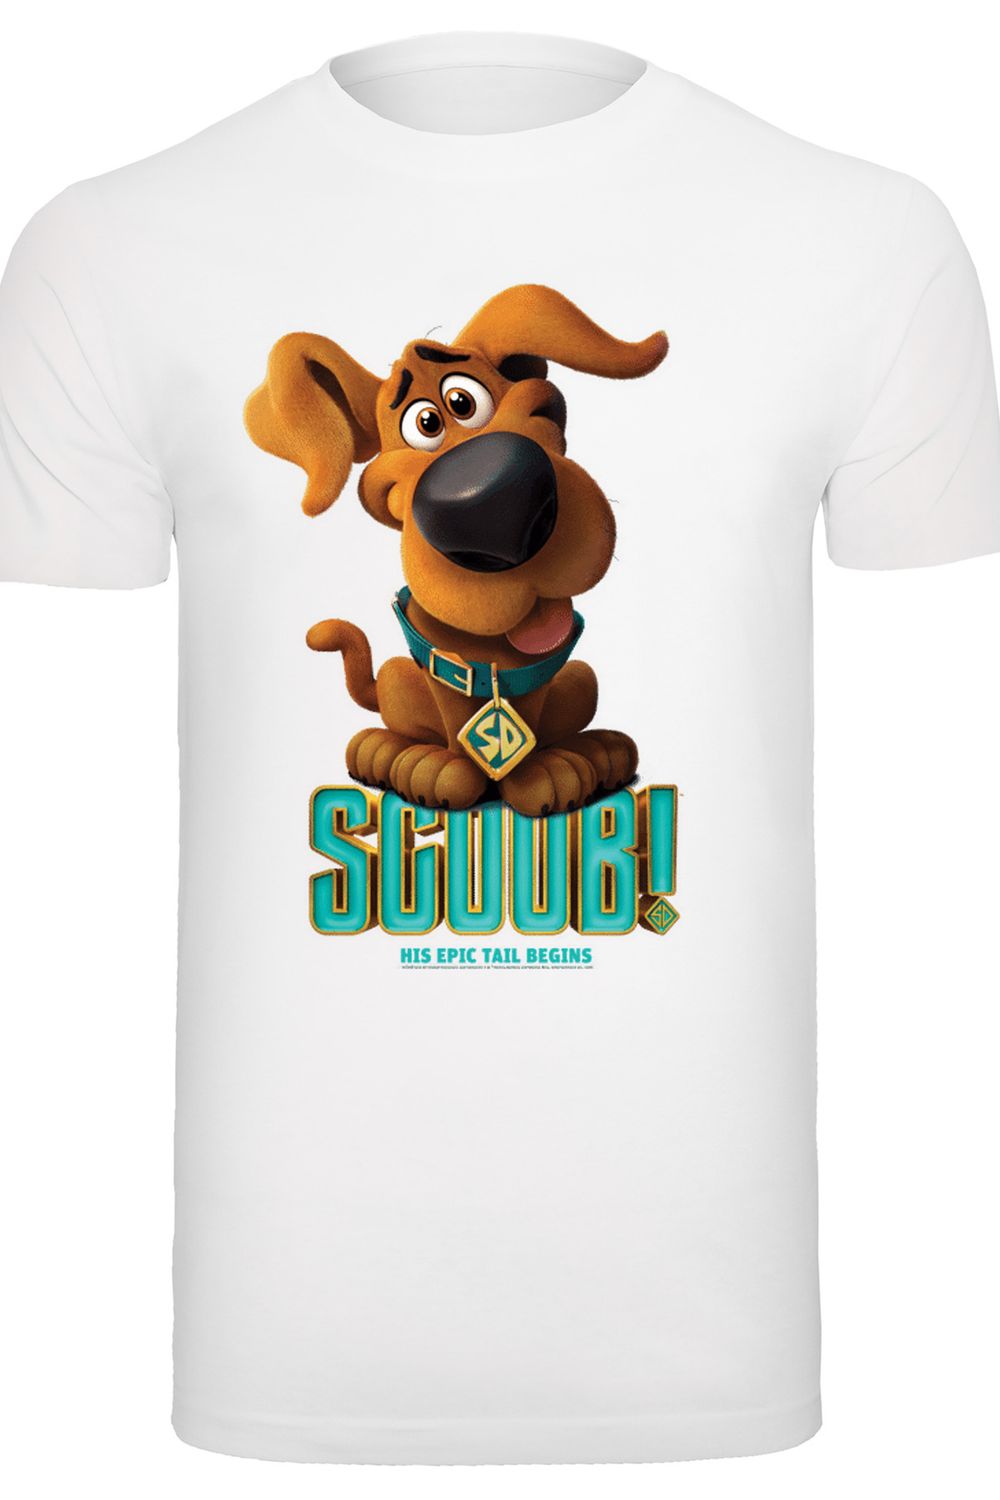 F4NT4STIC T-Shirt - Schwarz - Regular Fit - Trendyol